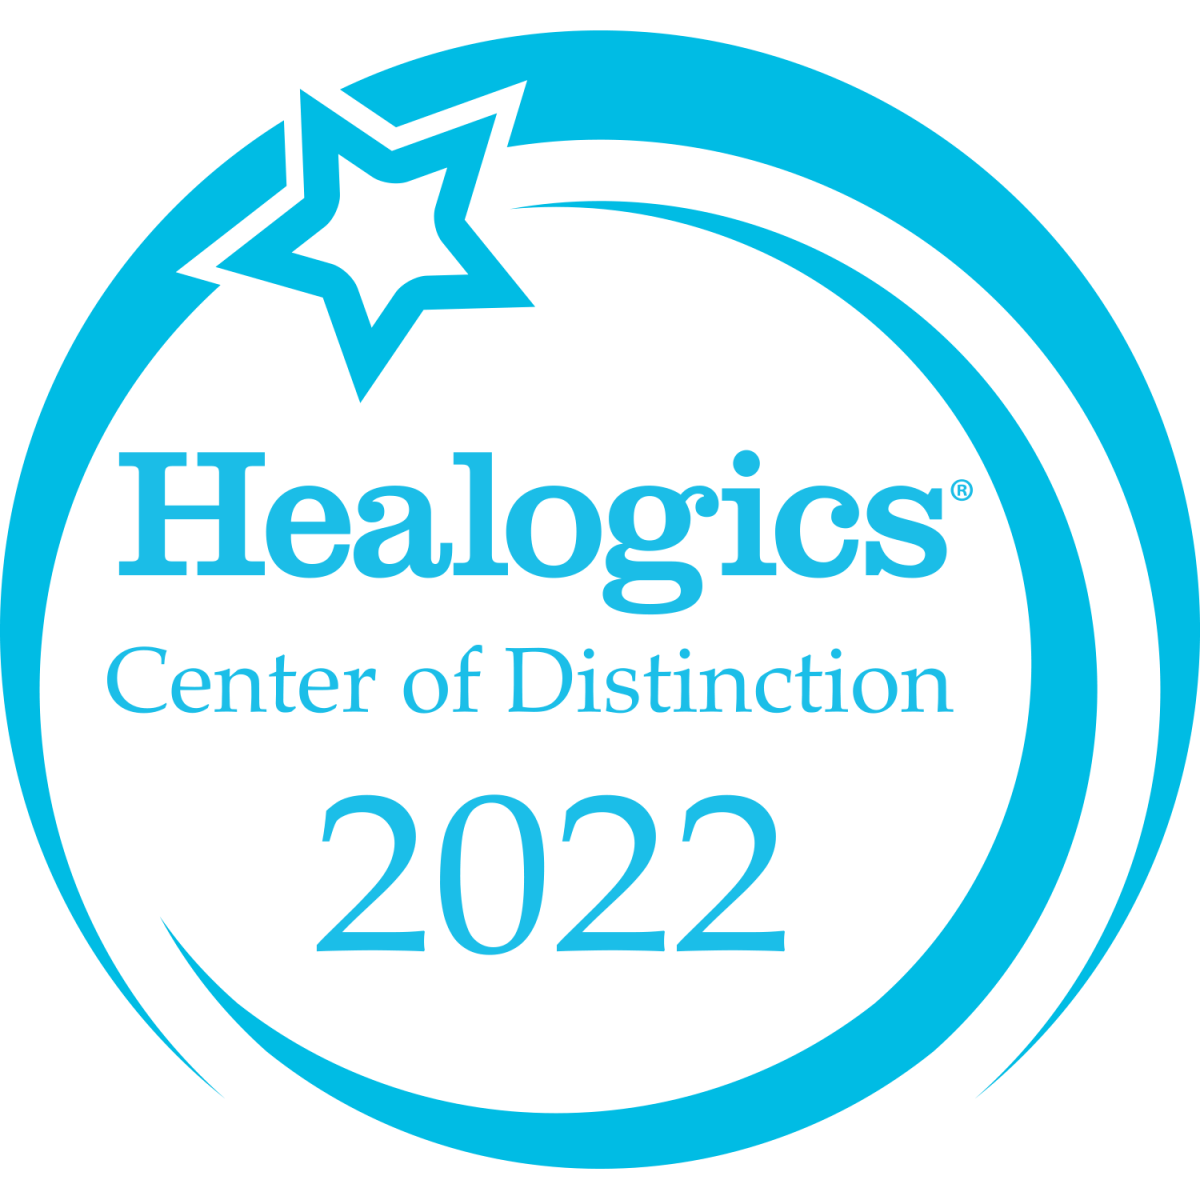 Healogics Center of Distinction 2022